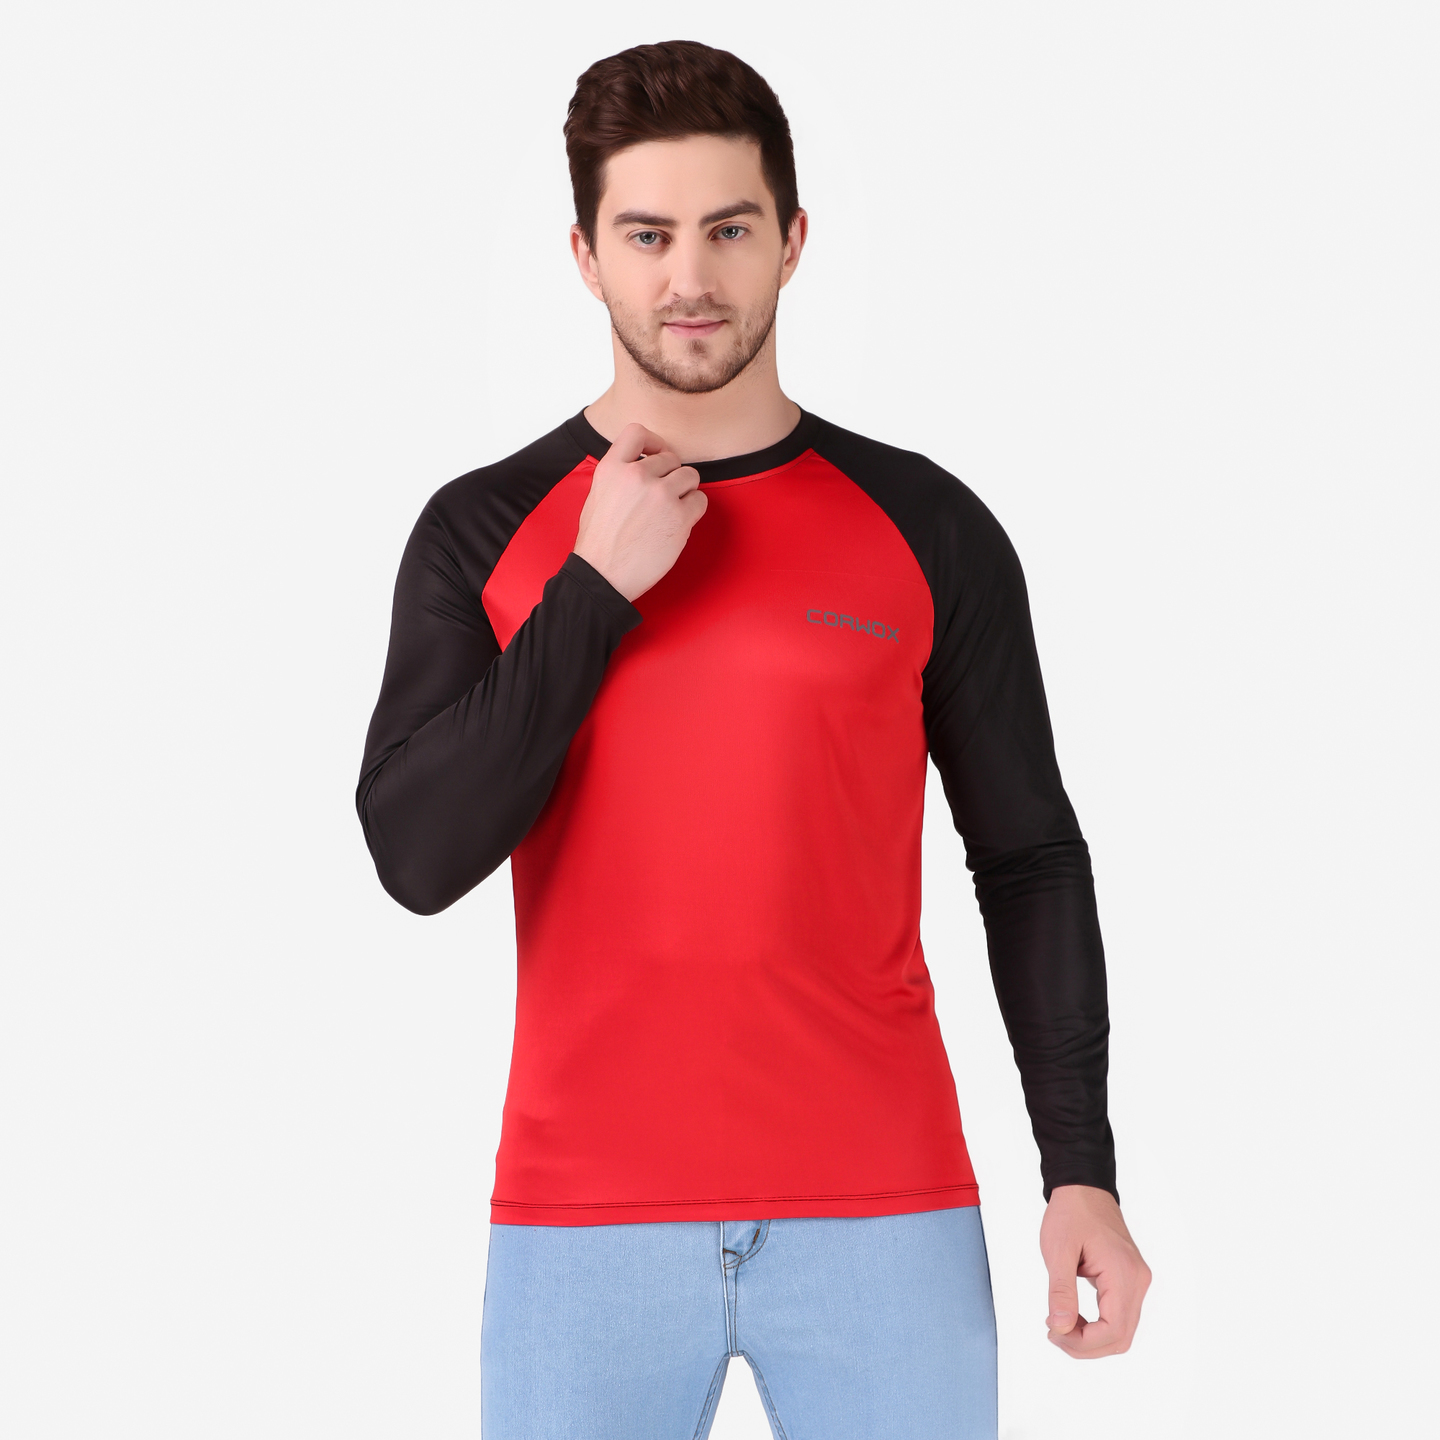 CORWOX Men's Red & Black Full Sleeves T-Shirt